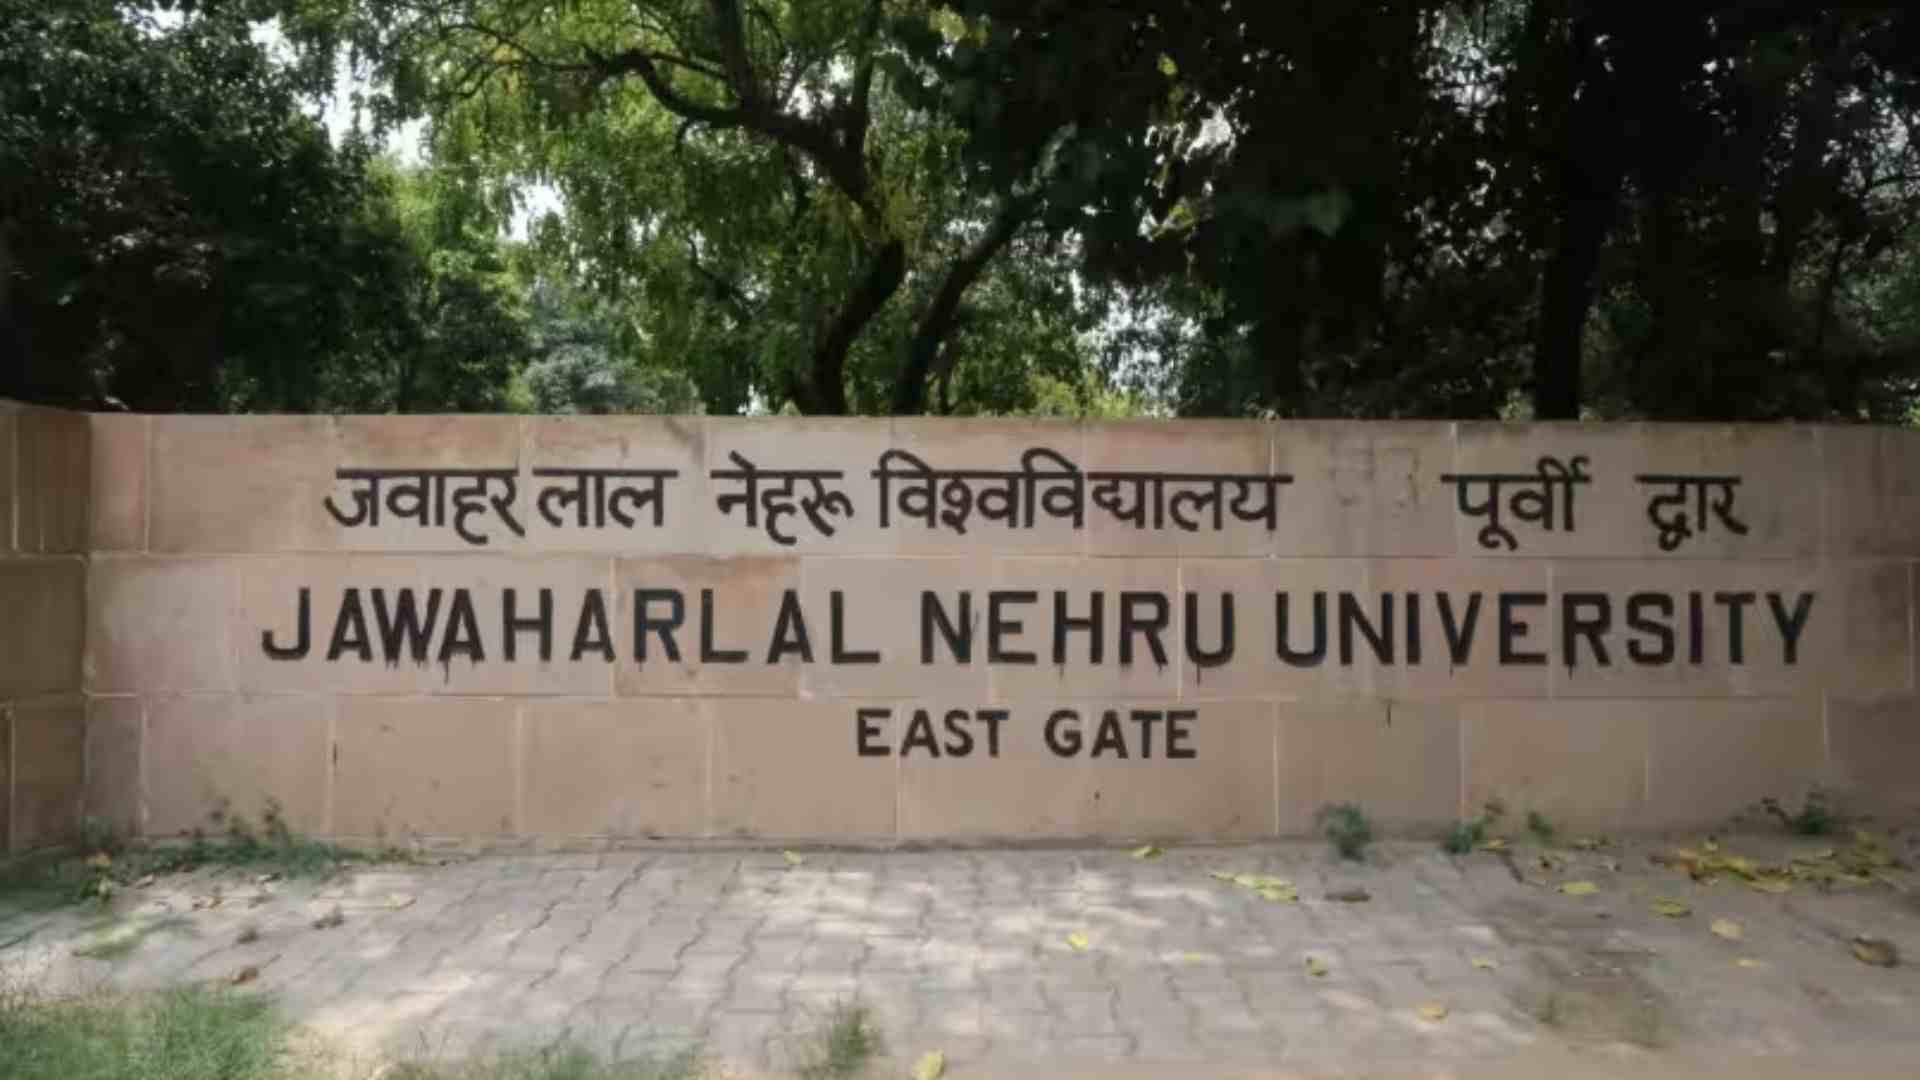 Delhi: JNU To Constitute Centers For Hindu, Buddhist & Jain Studies